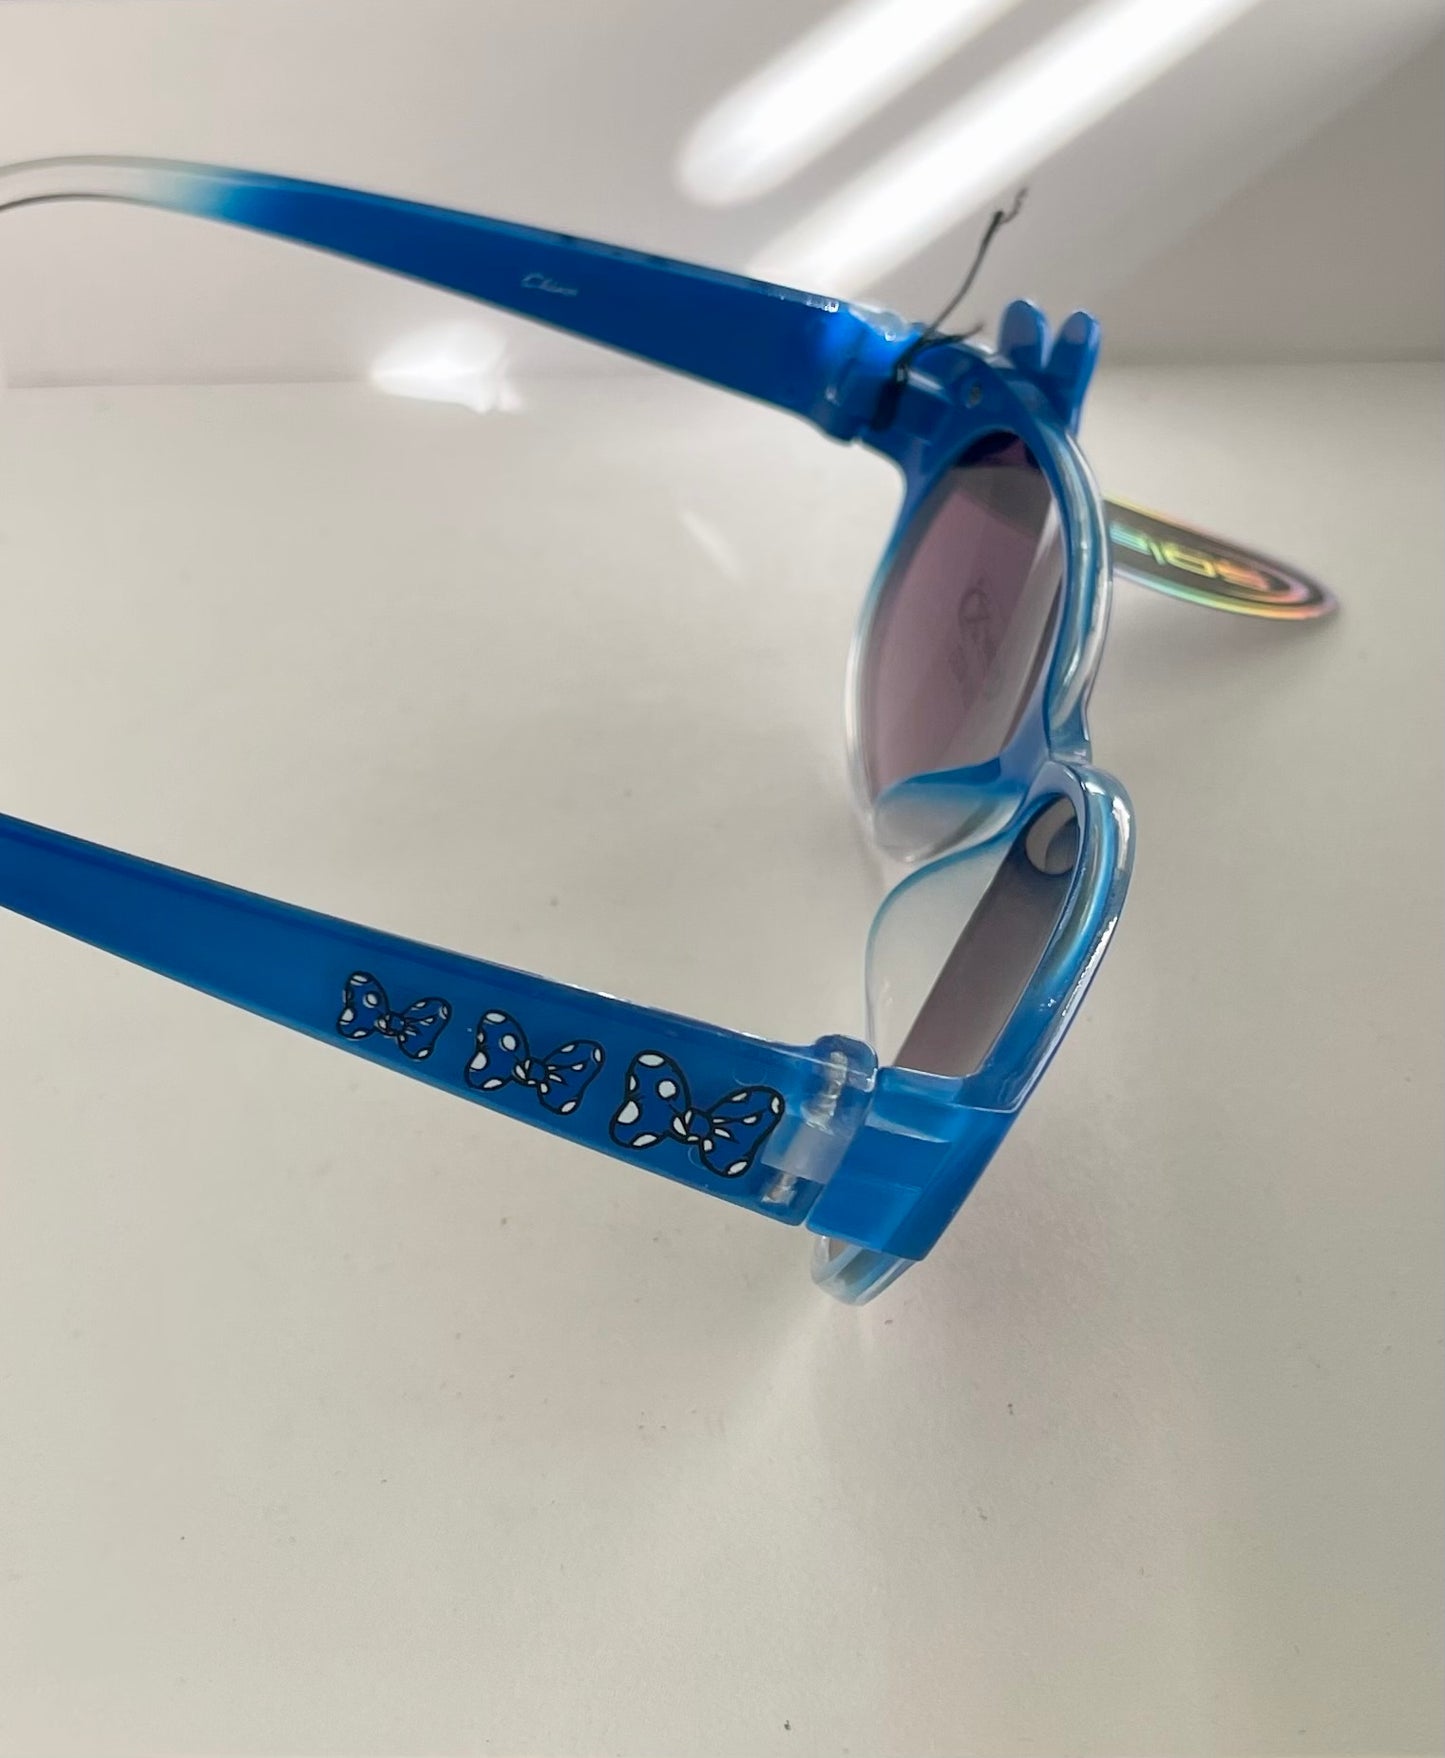 Sunglasses 0362 blue